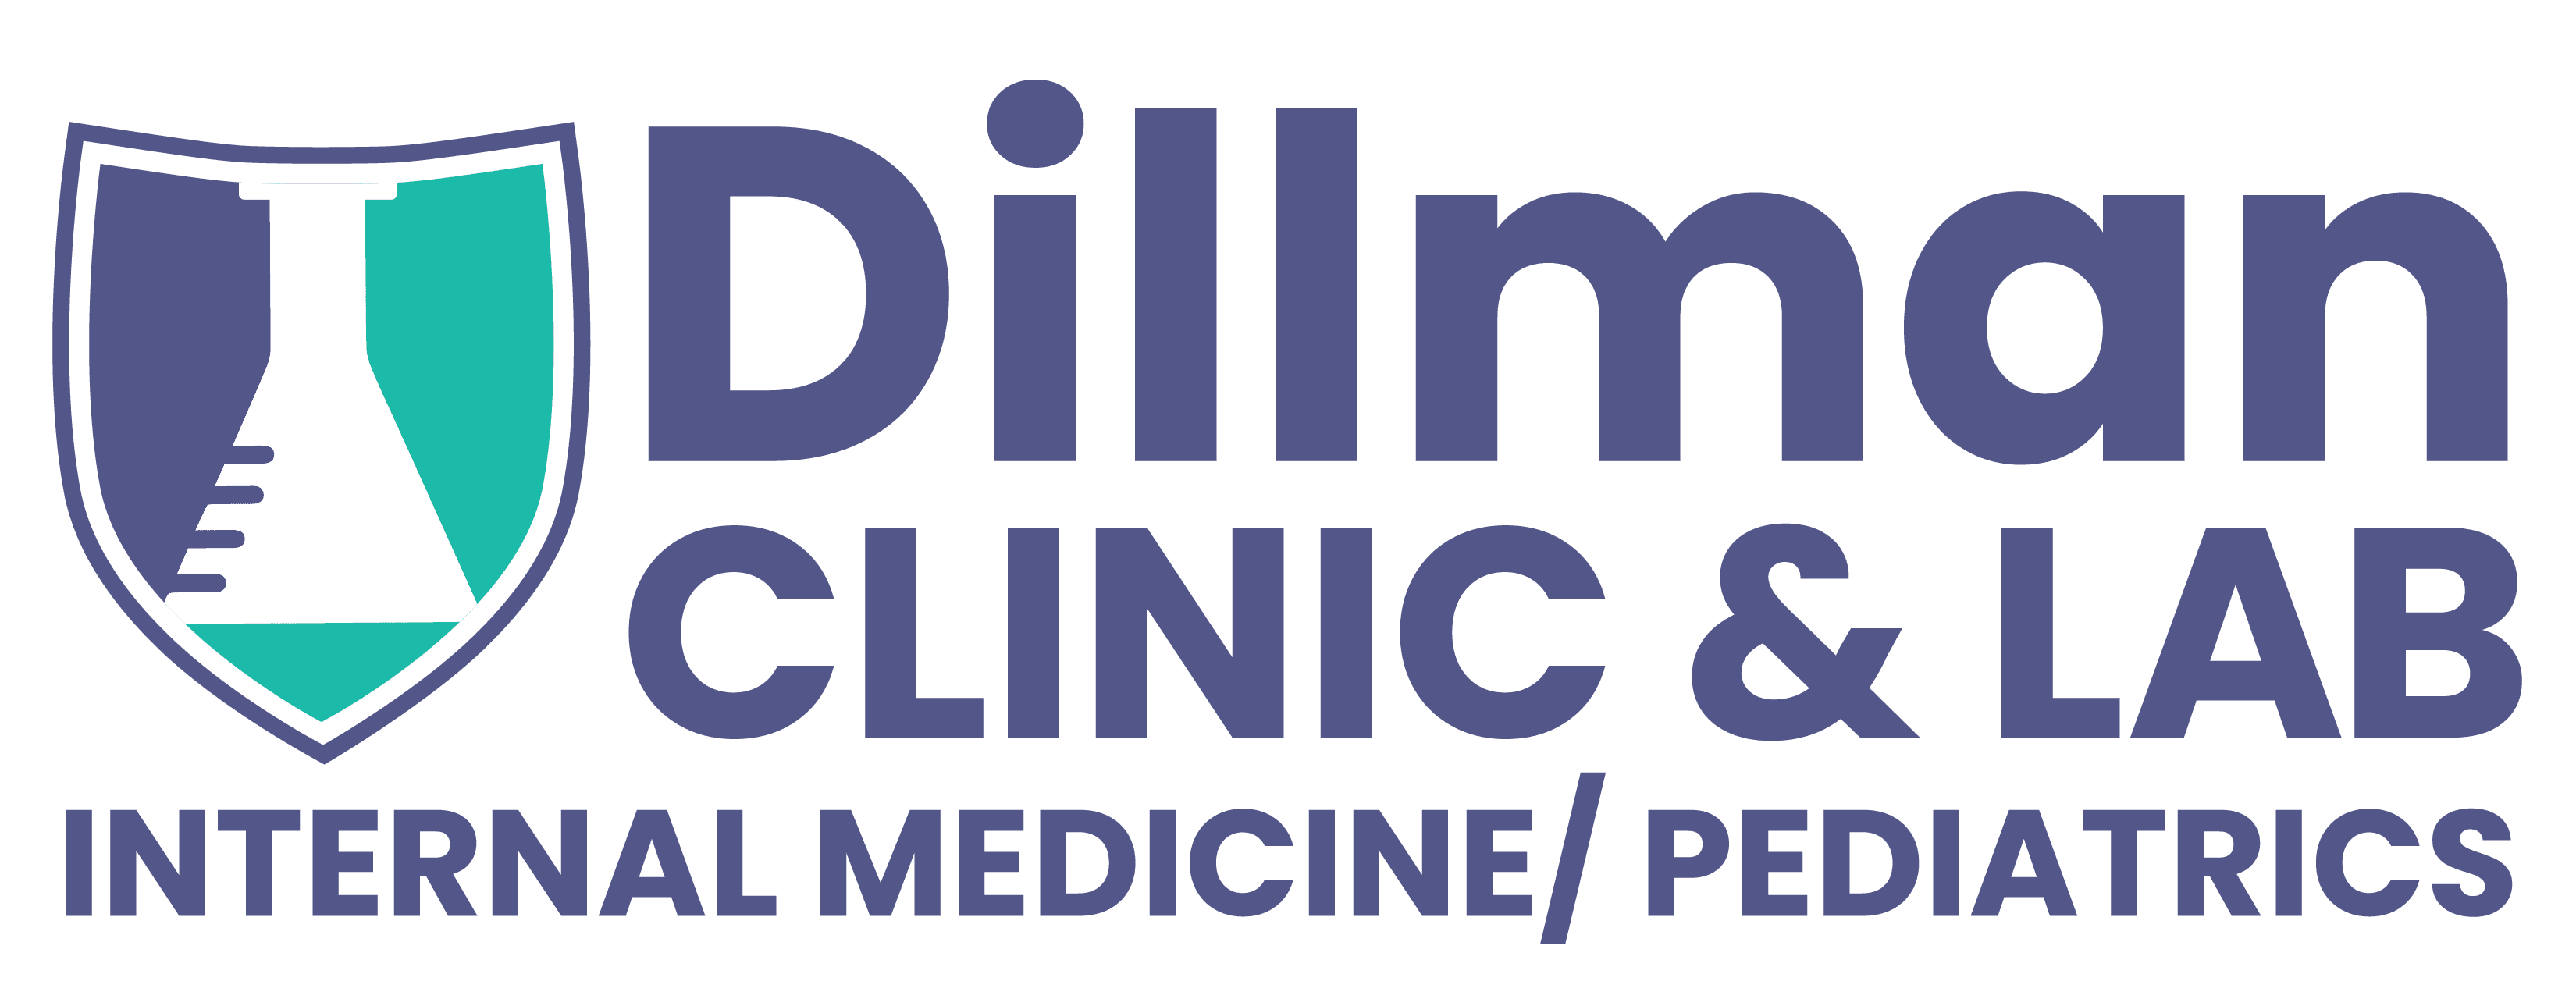 Dillman Clinic and Lab Logo